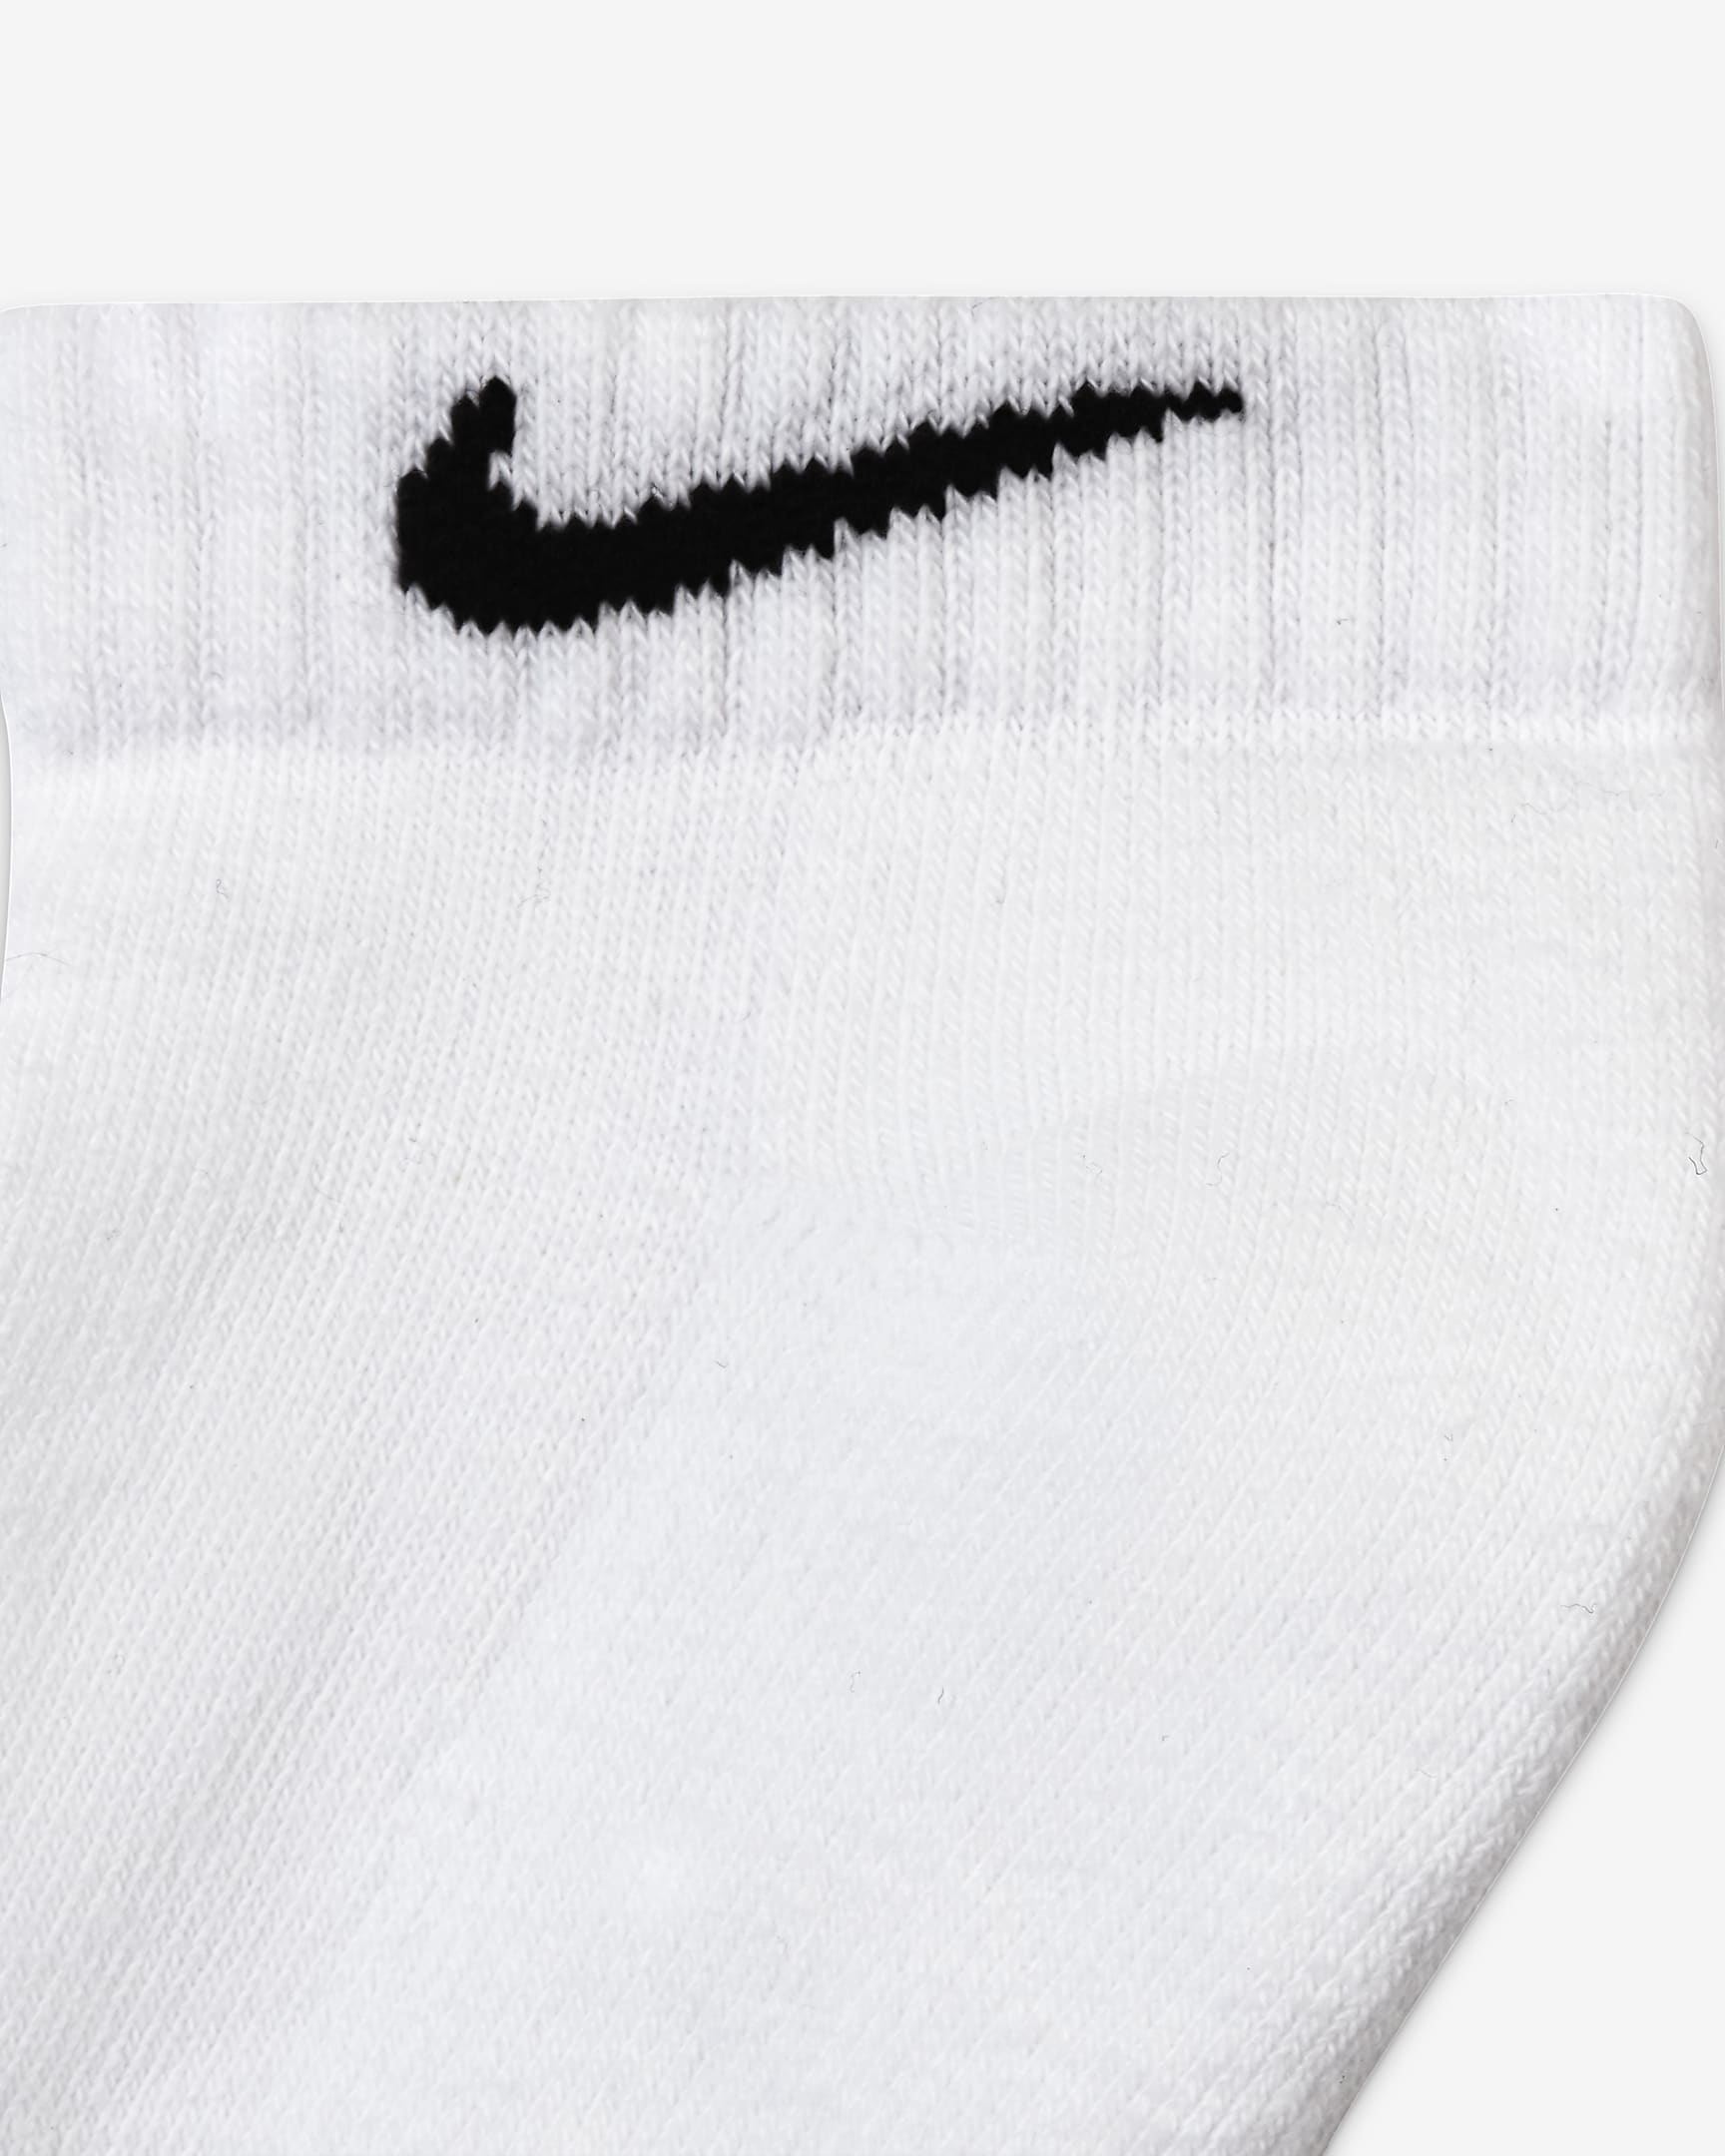 Nike Everyday Cushioned Training Low Socks (3 Pairs). Nike PH